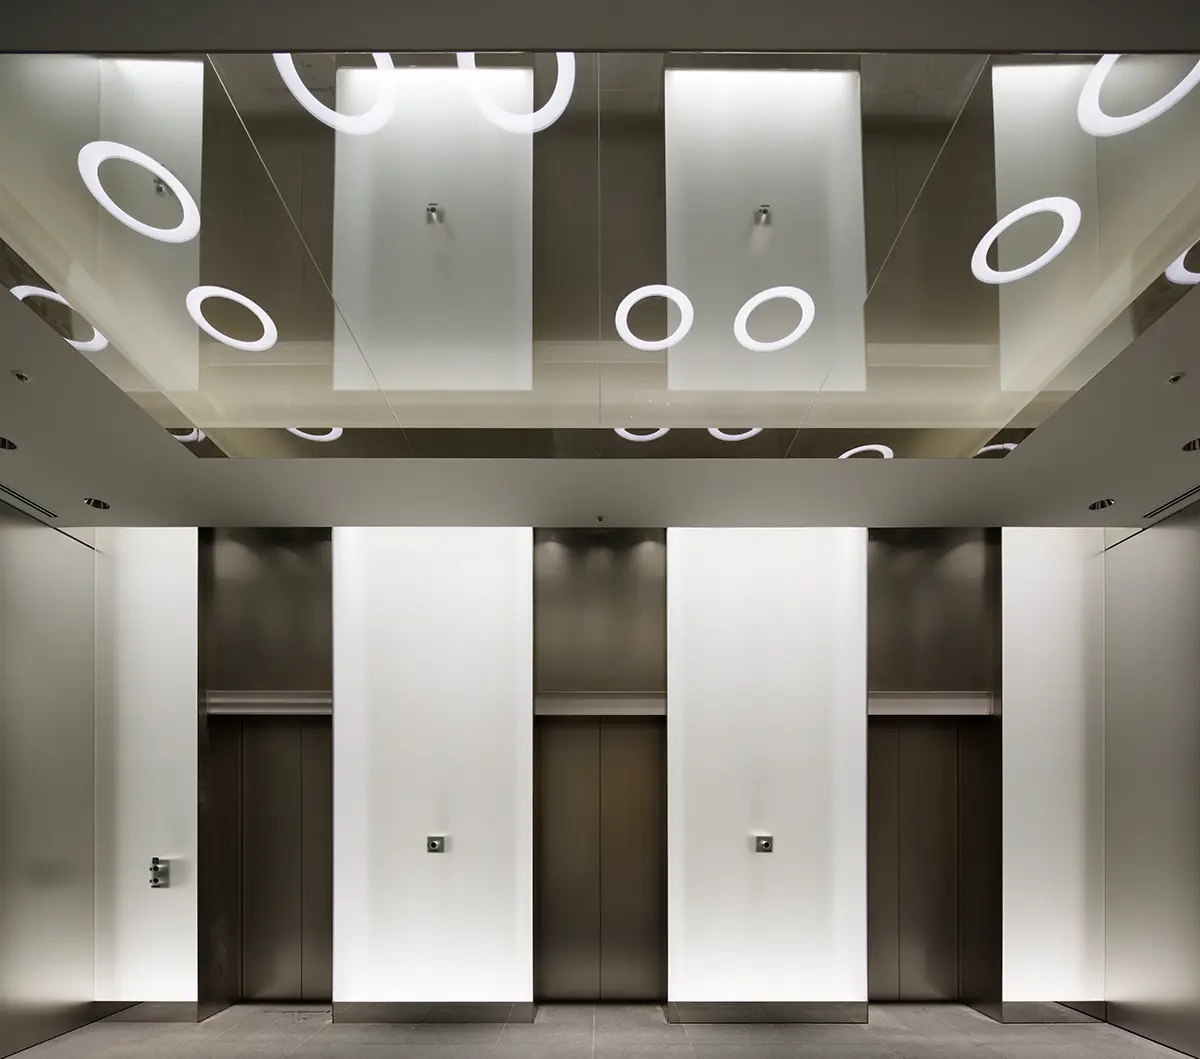 TERASO-Ⅱ：オフィス専用のエレベーターホール。正面の光壁はフロストガラスの内部の上下にLEDシームレスラインを内蔵し、天井はハーフミラーガラスの奥に間接照明とリング上の照明器具を入れることにより、オフィス空間への切替を演出している。